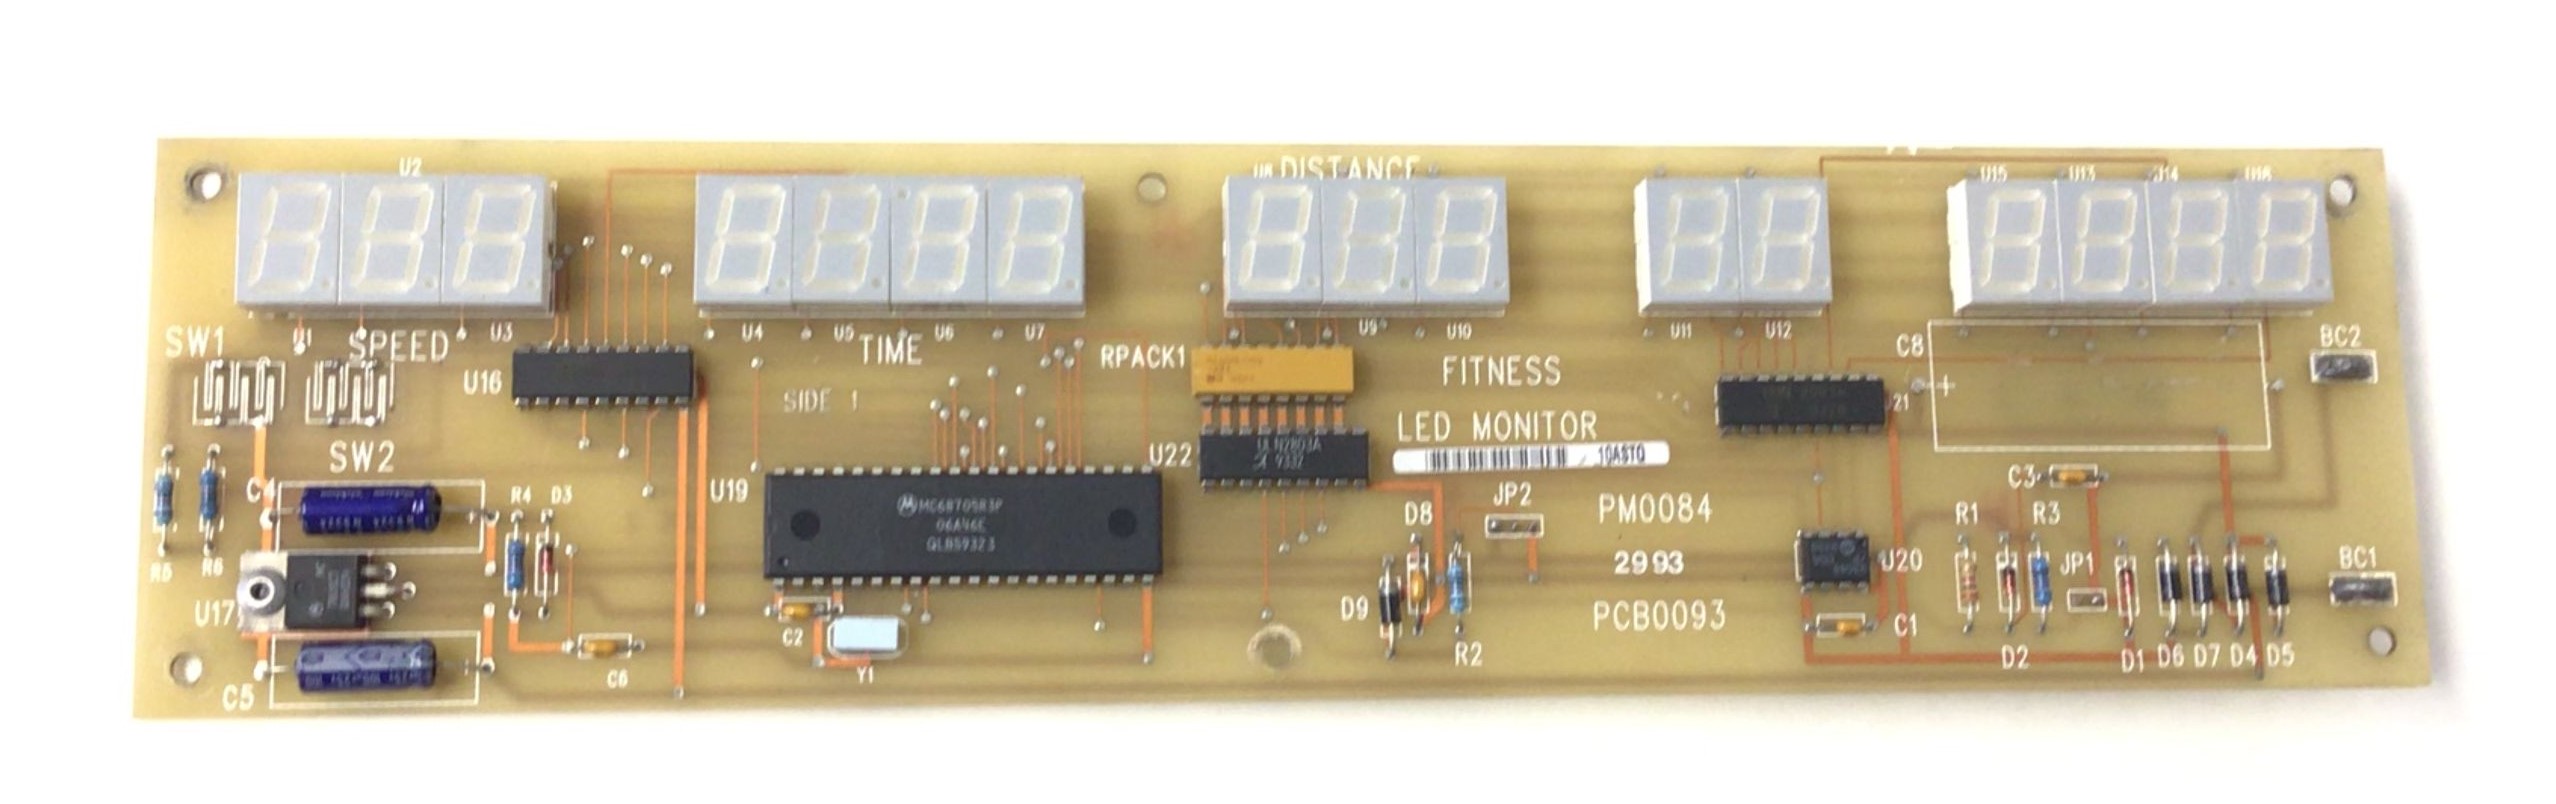 Treadmill Display Console Board (Used)